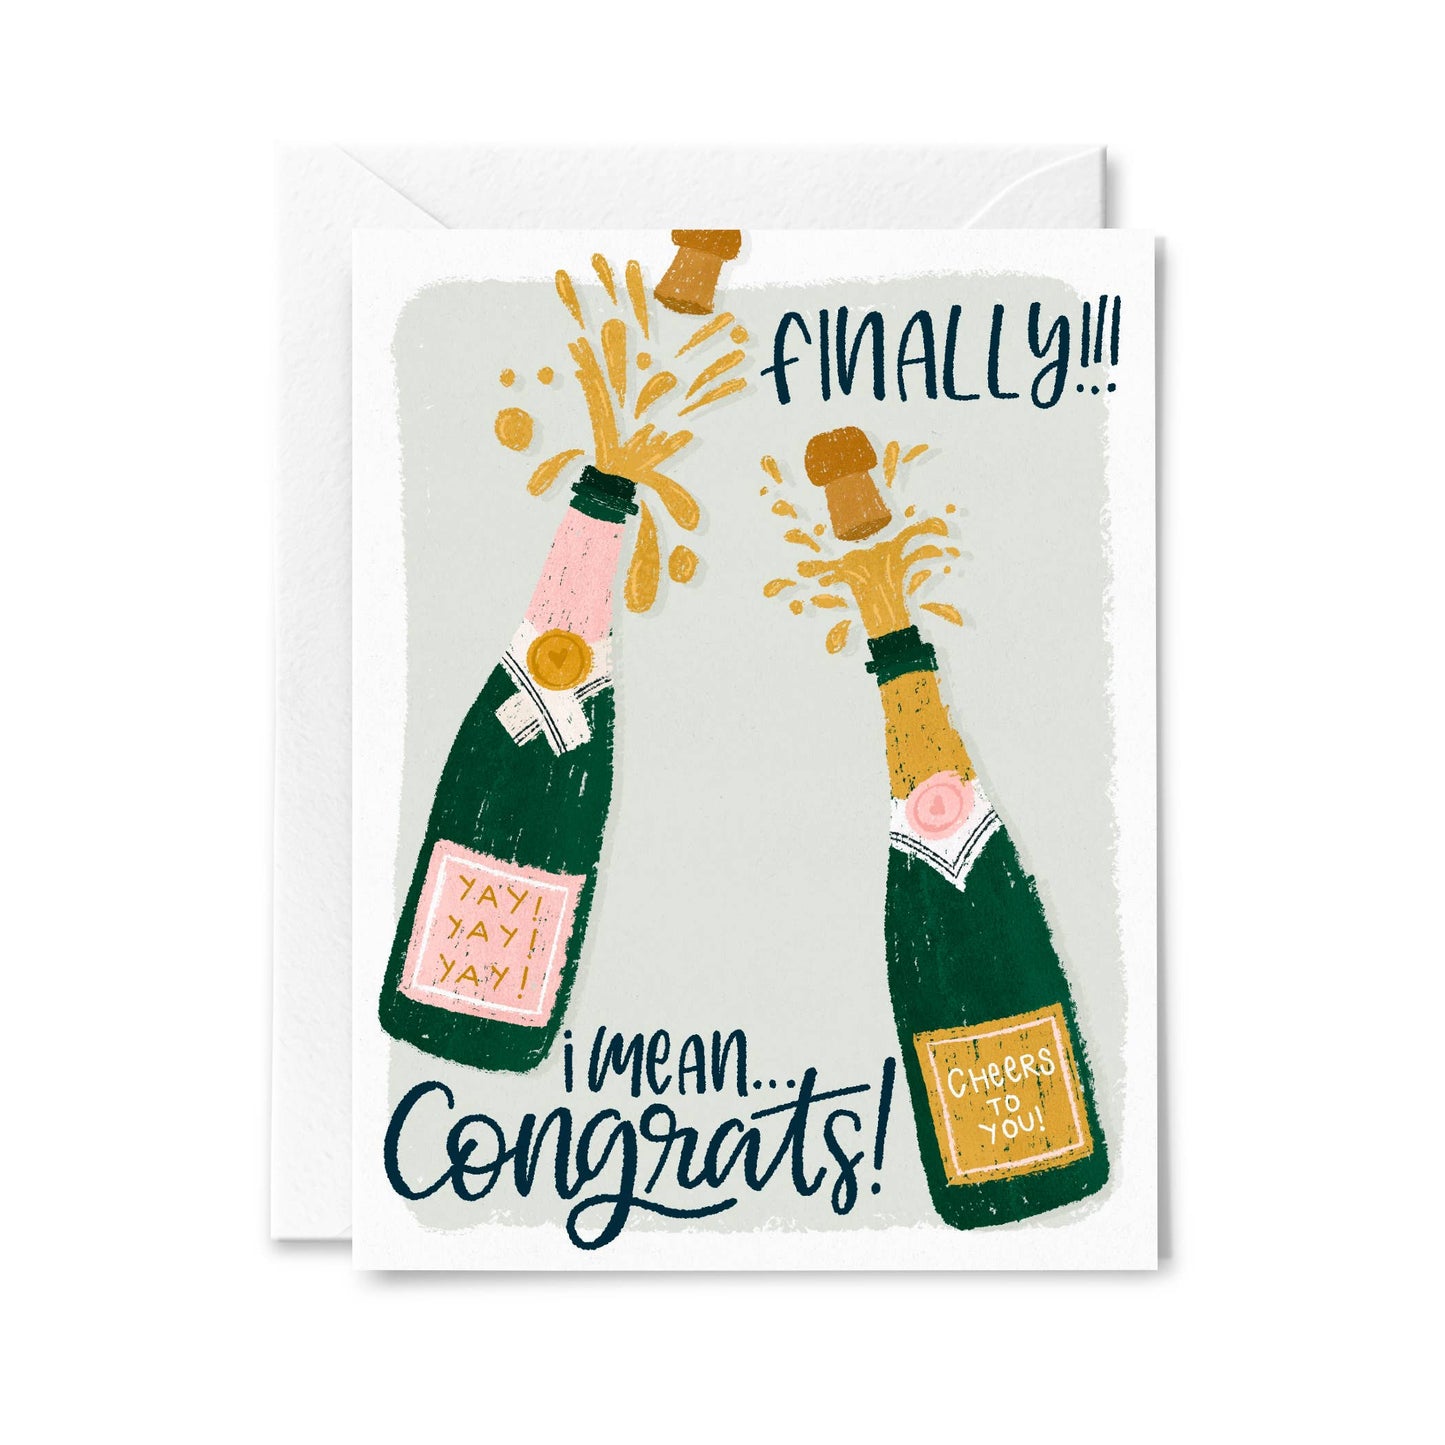 Finally, I mean Congrats! | Funny Wedding Greeting Card